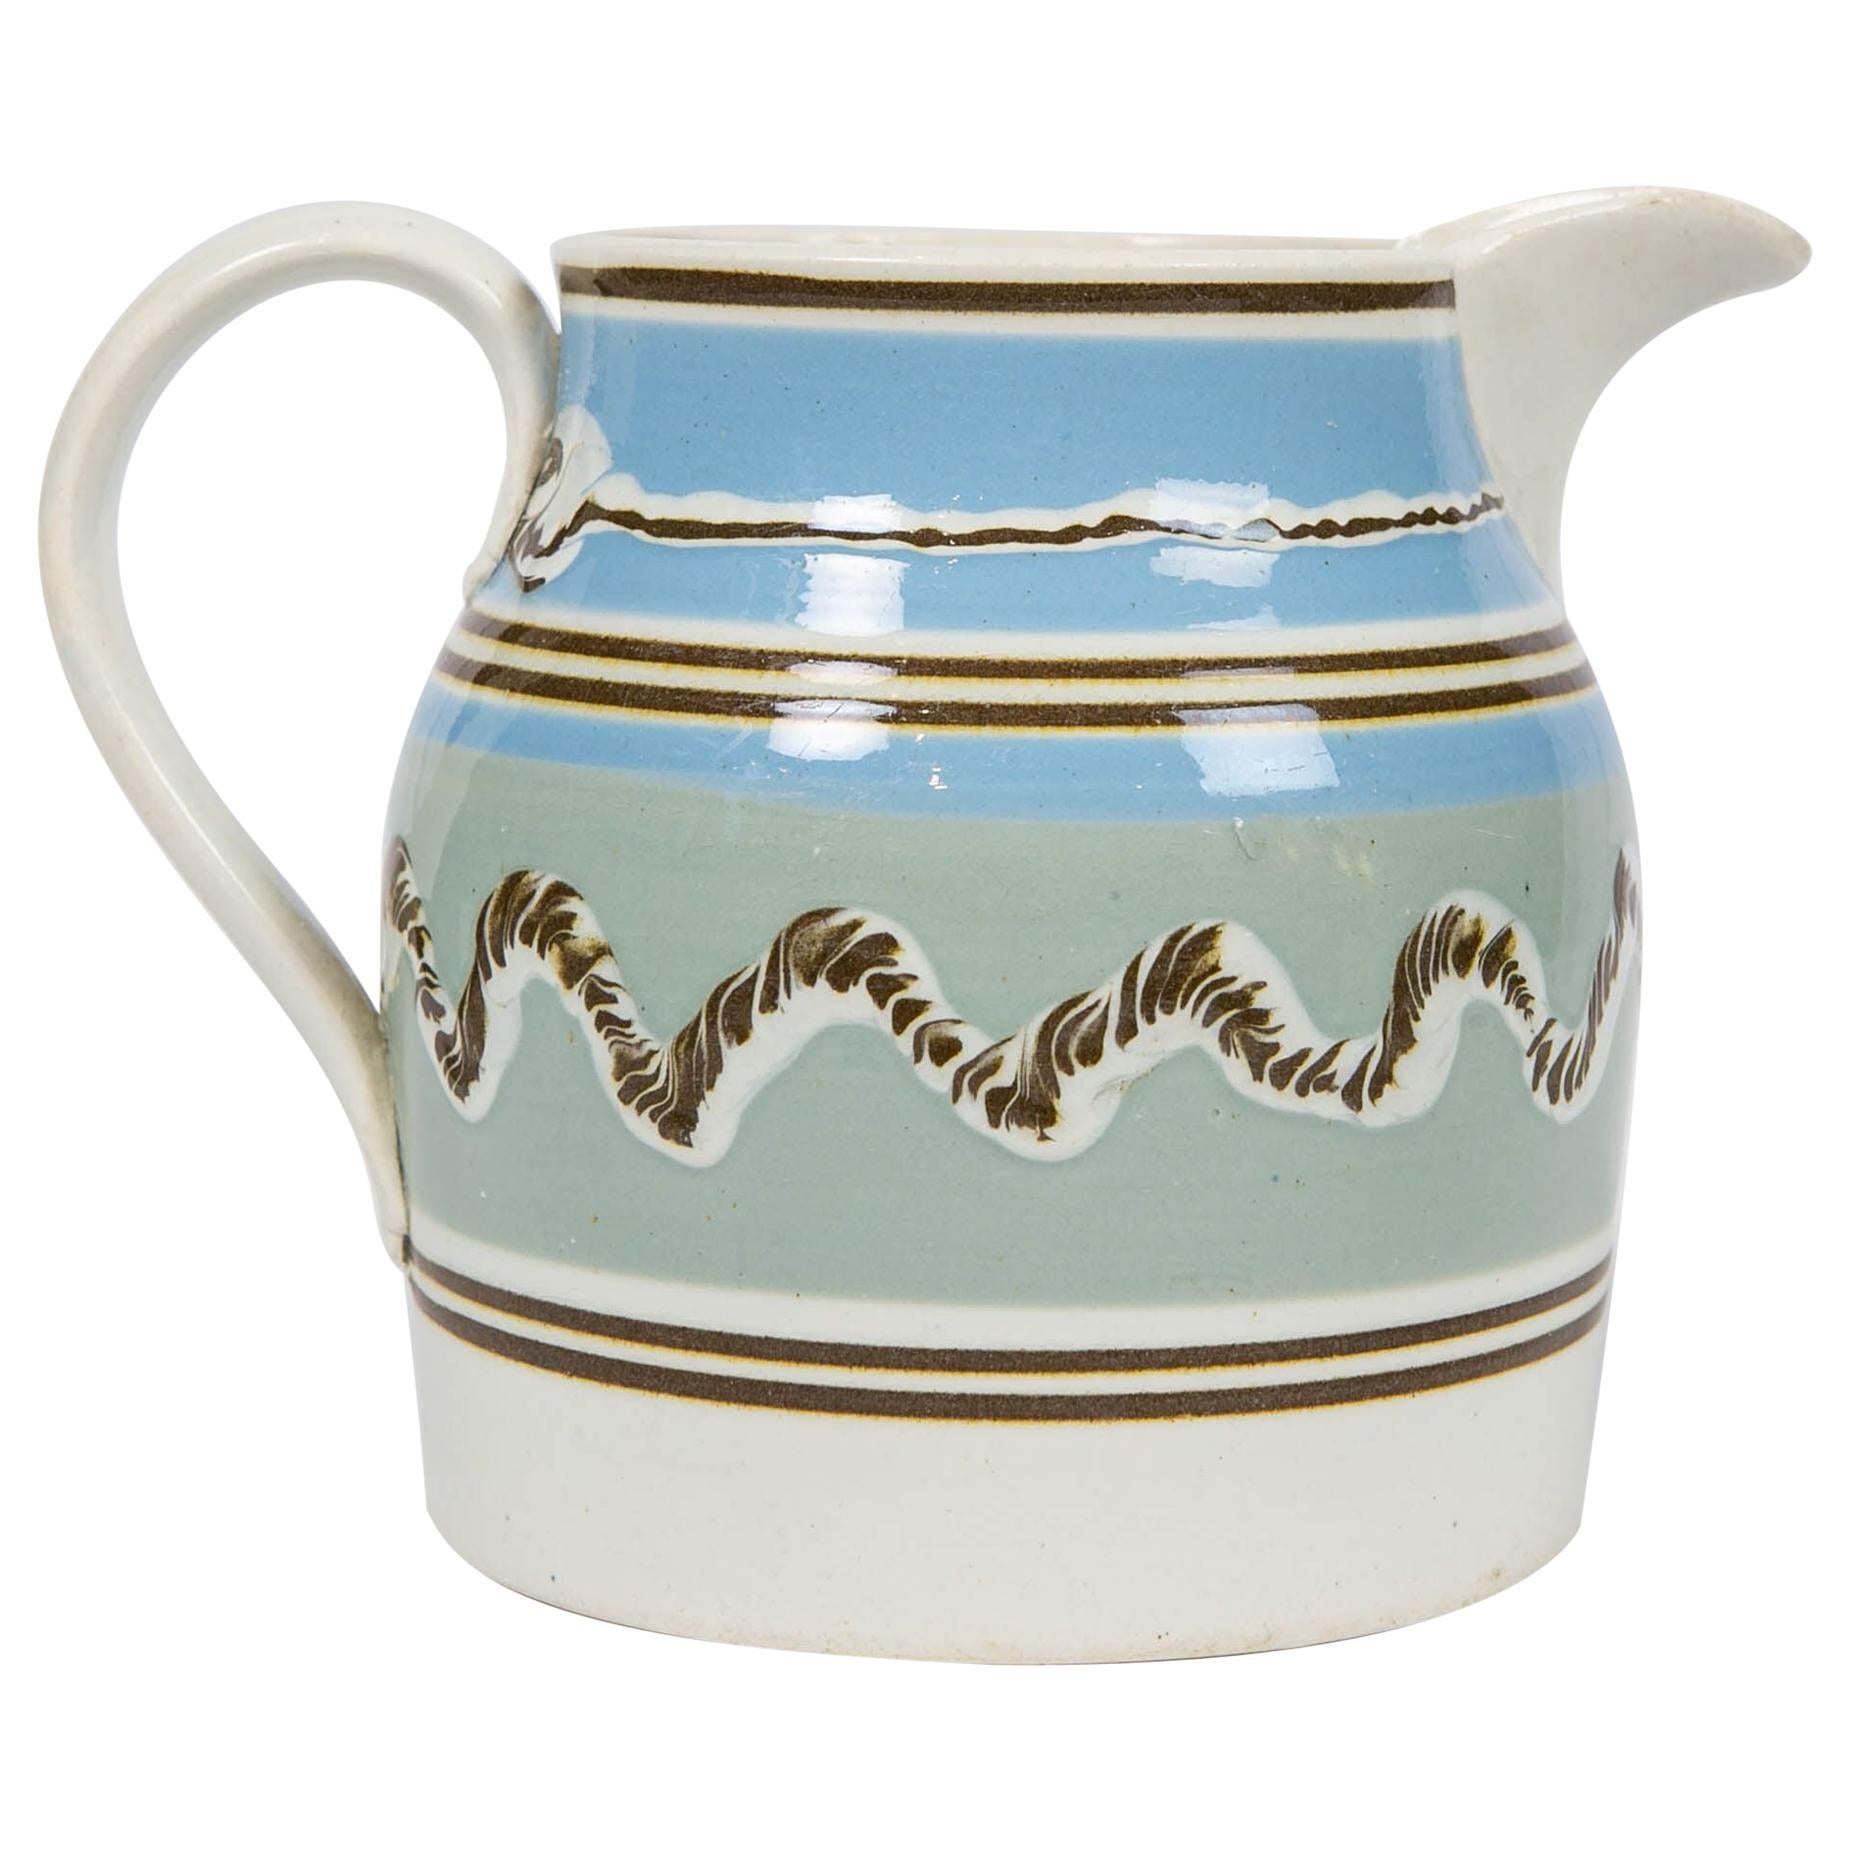 Mochaware Pitcher Made of Pearl-Glazed Creamware in England, circa 1820